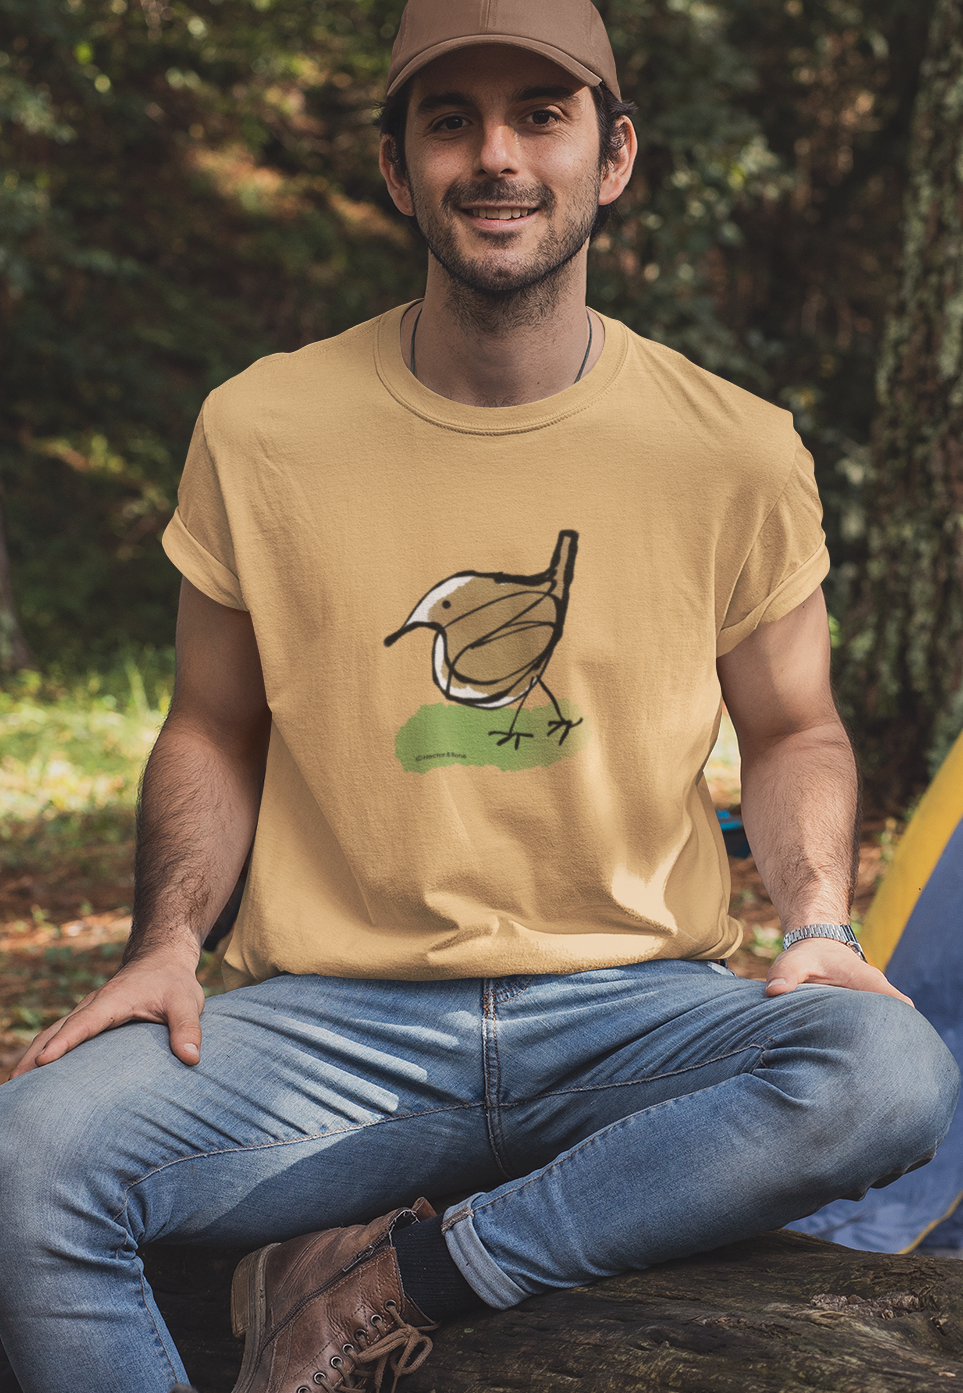 Jenny Wren T-shirt - Young man wearing illustrated little Jenny Wren bird t-shirt on nispero ochre colour vegan cotton t-shirts by Hector and Bone